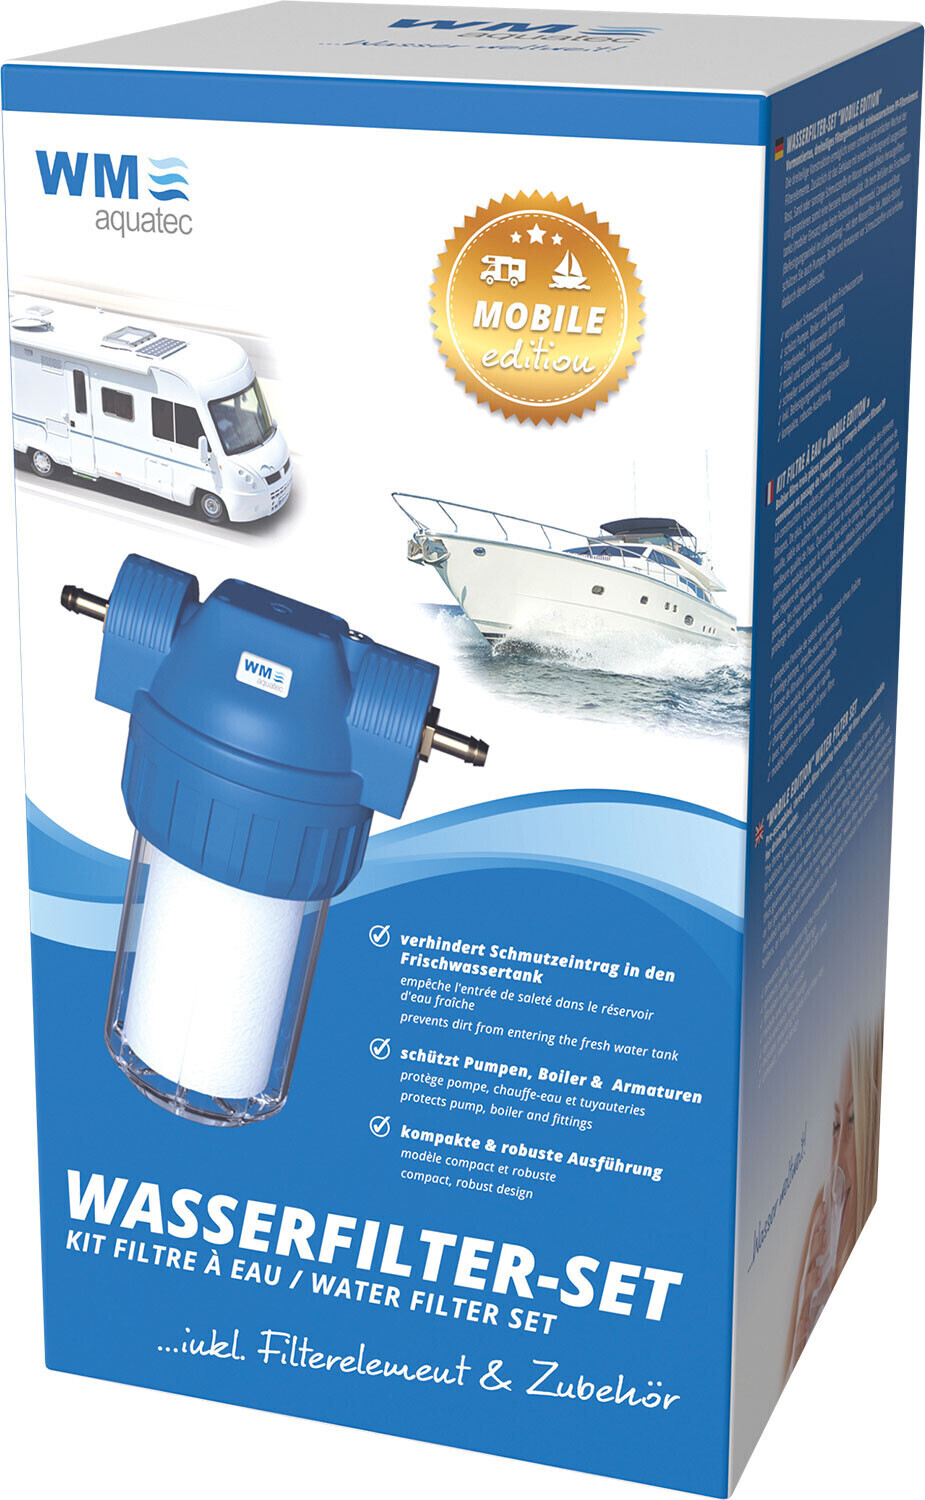 WM aquatec Wasserfilter-Set Mobile Edition ab 39,99 €